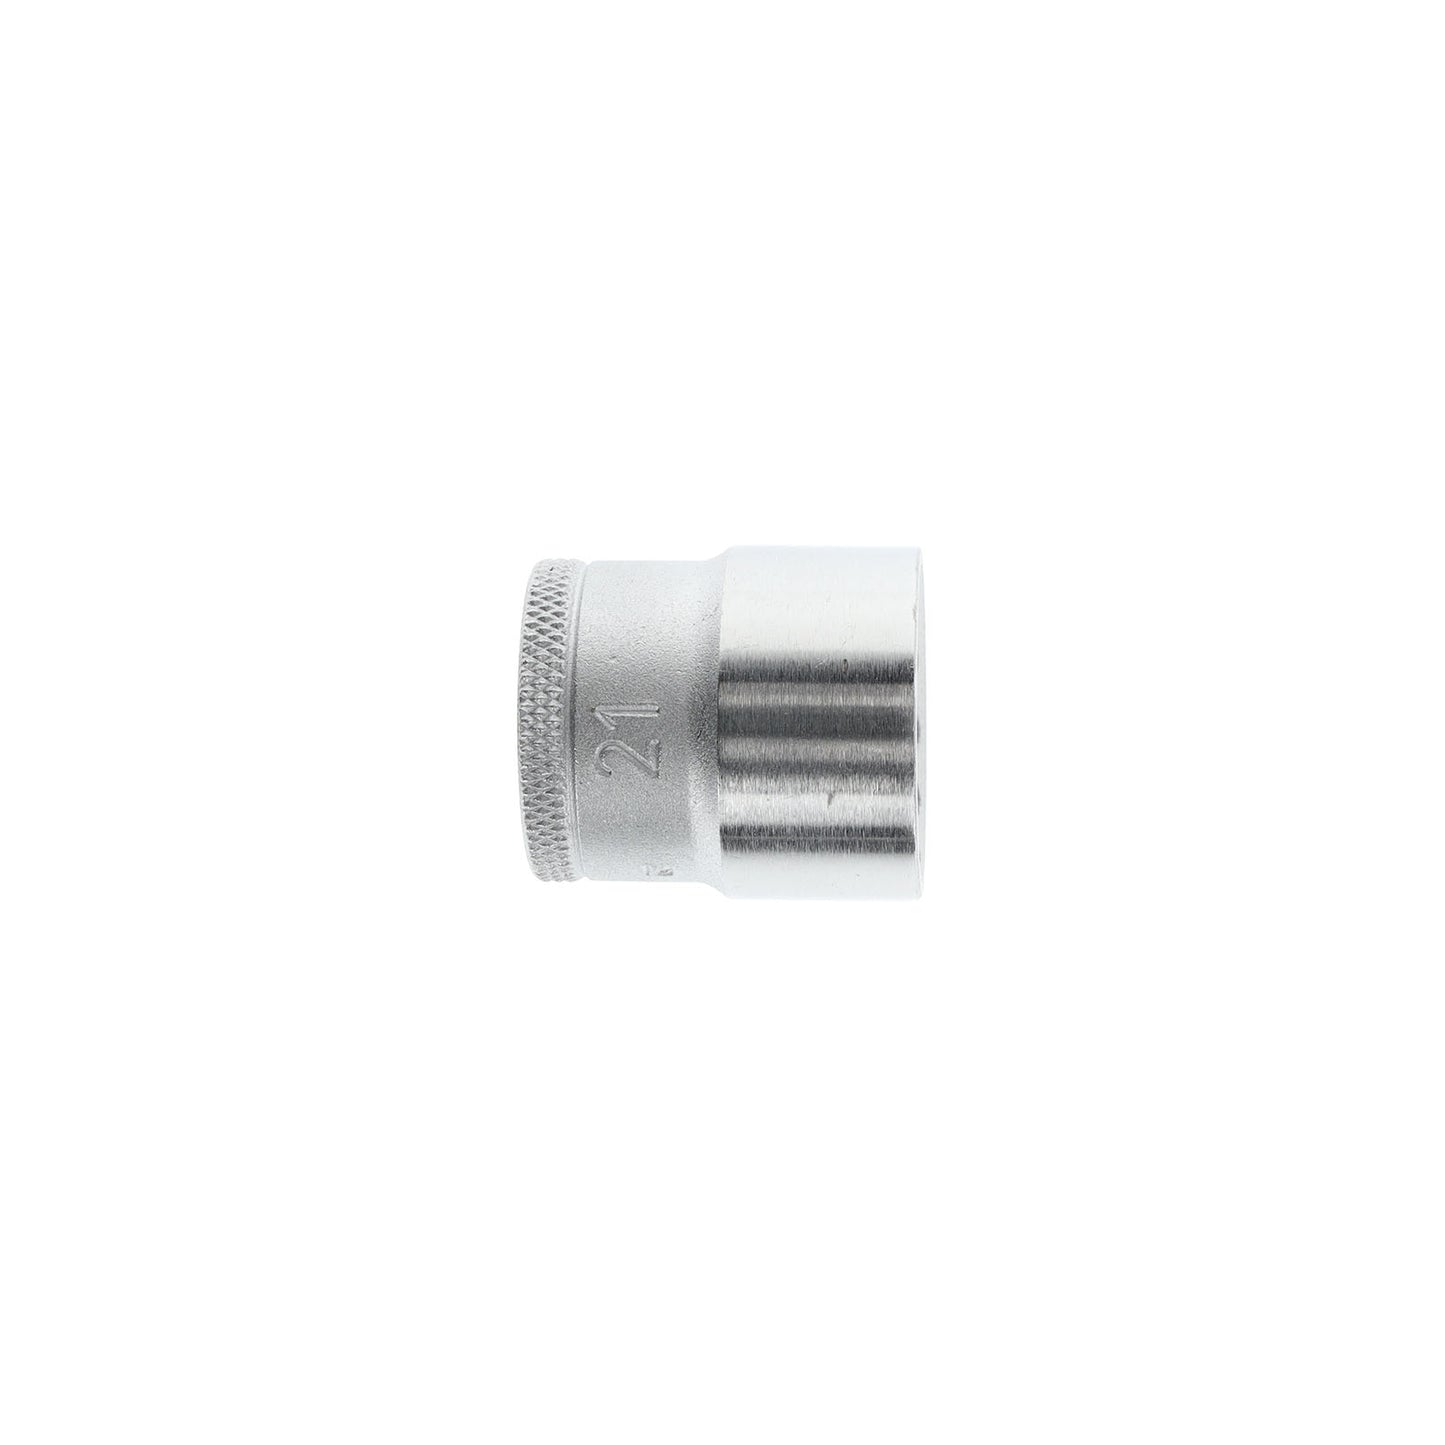 GEDORE D 30 21 - Unit Drive Socket 3/8", 21 mm (6231720)